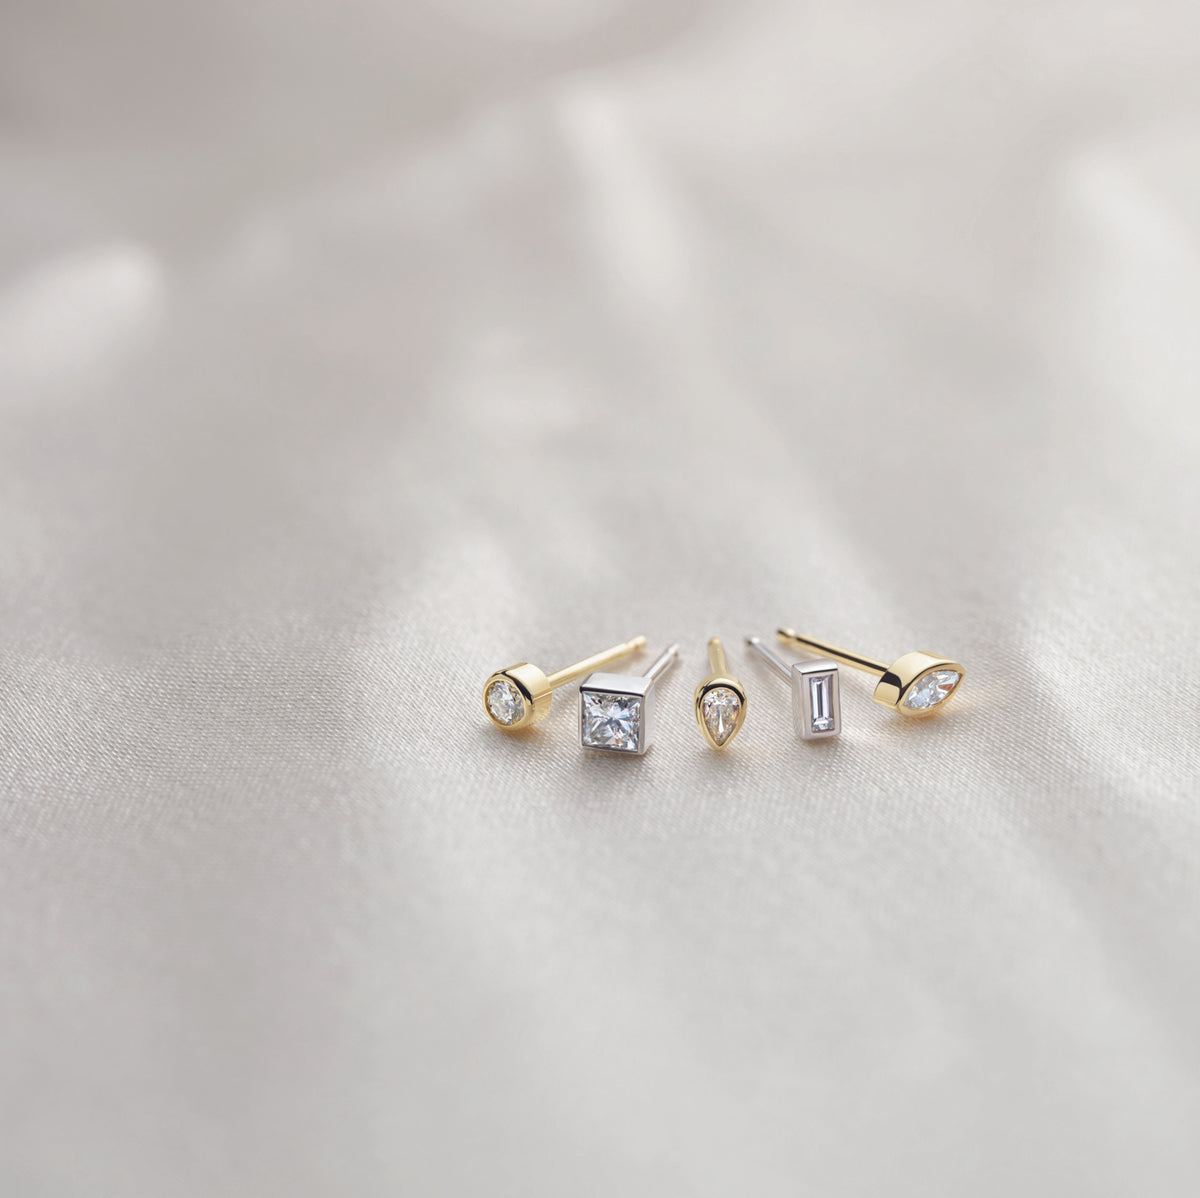 Petite Bezel Post Earrings | Round Diamond